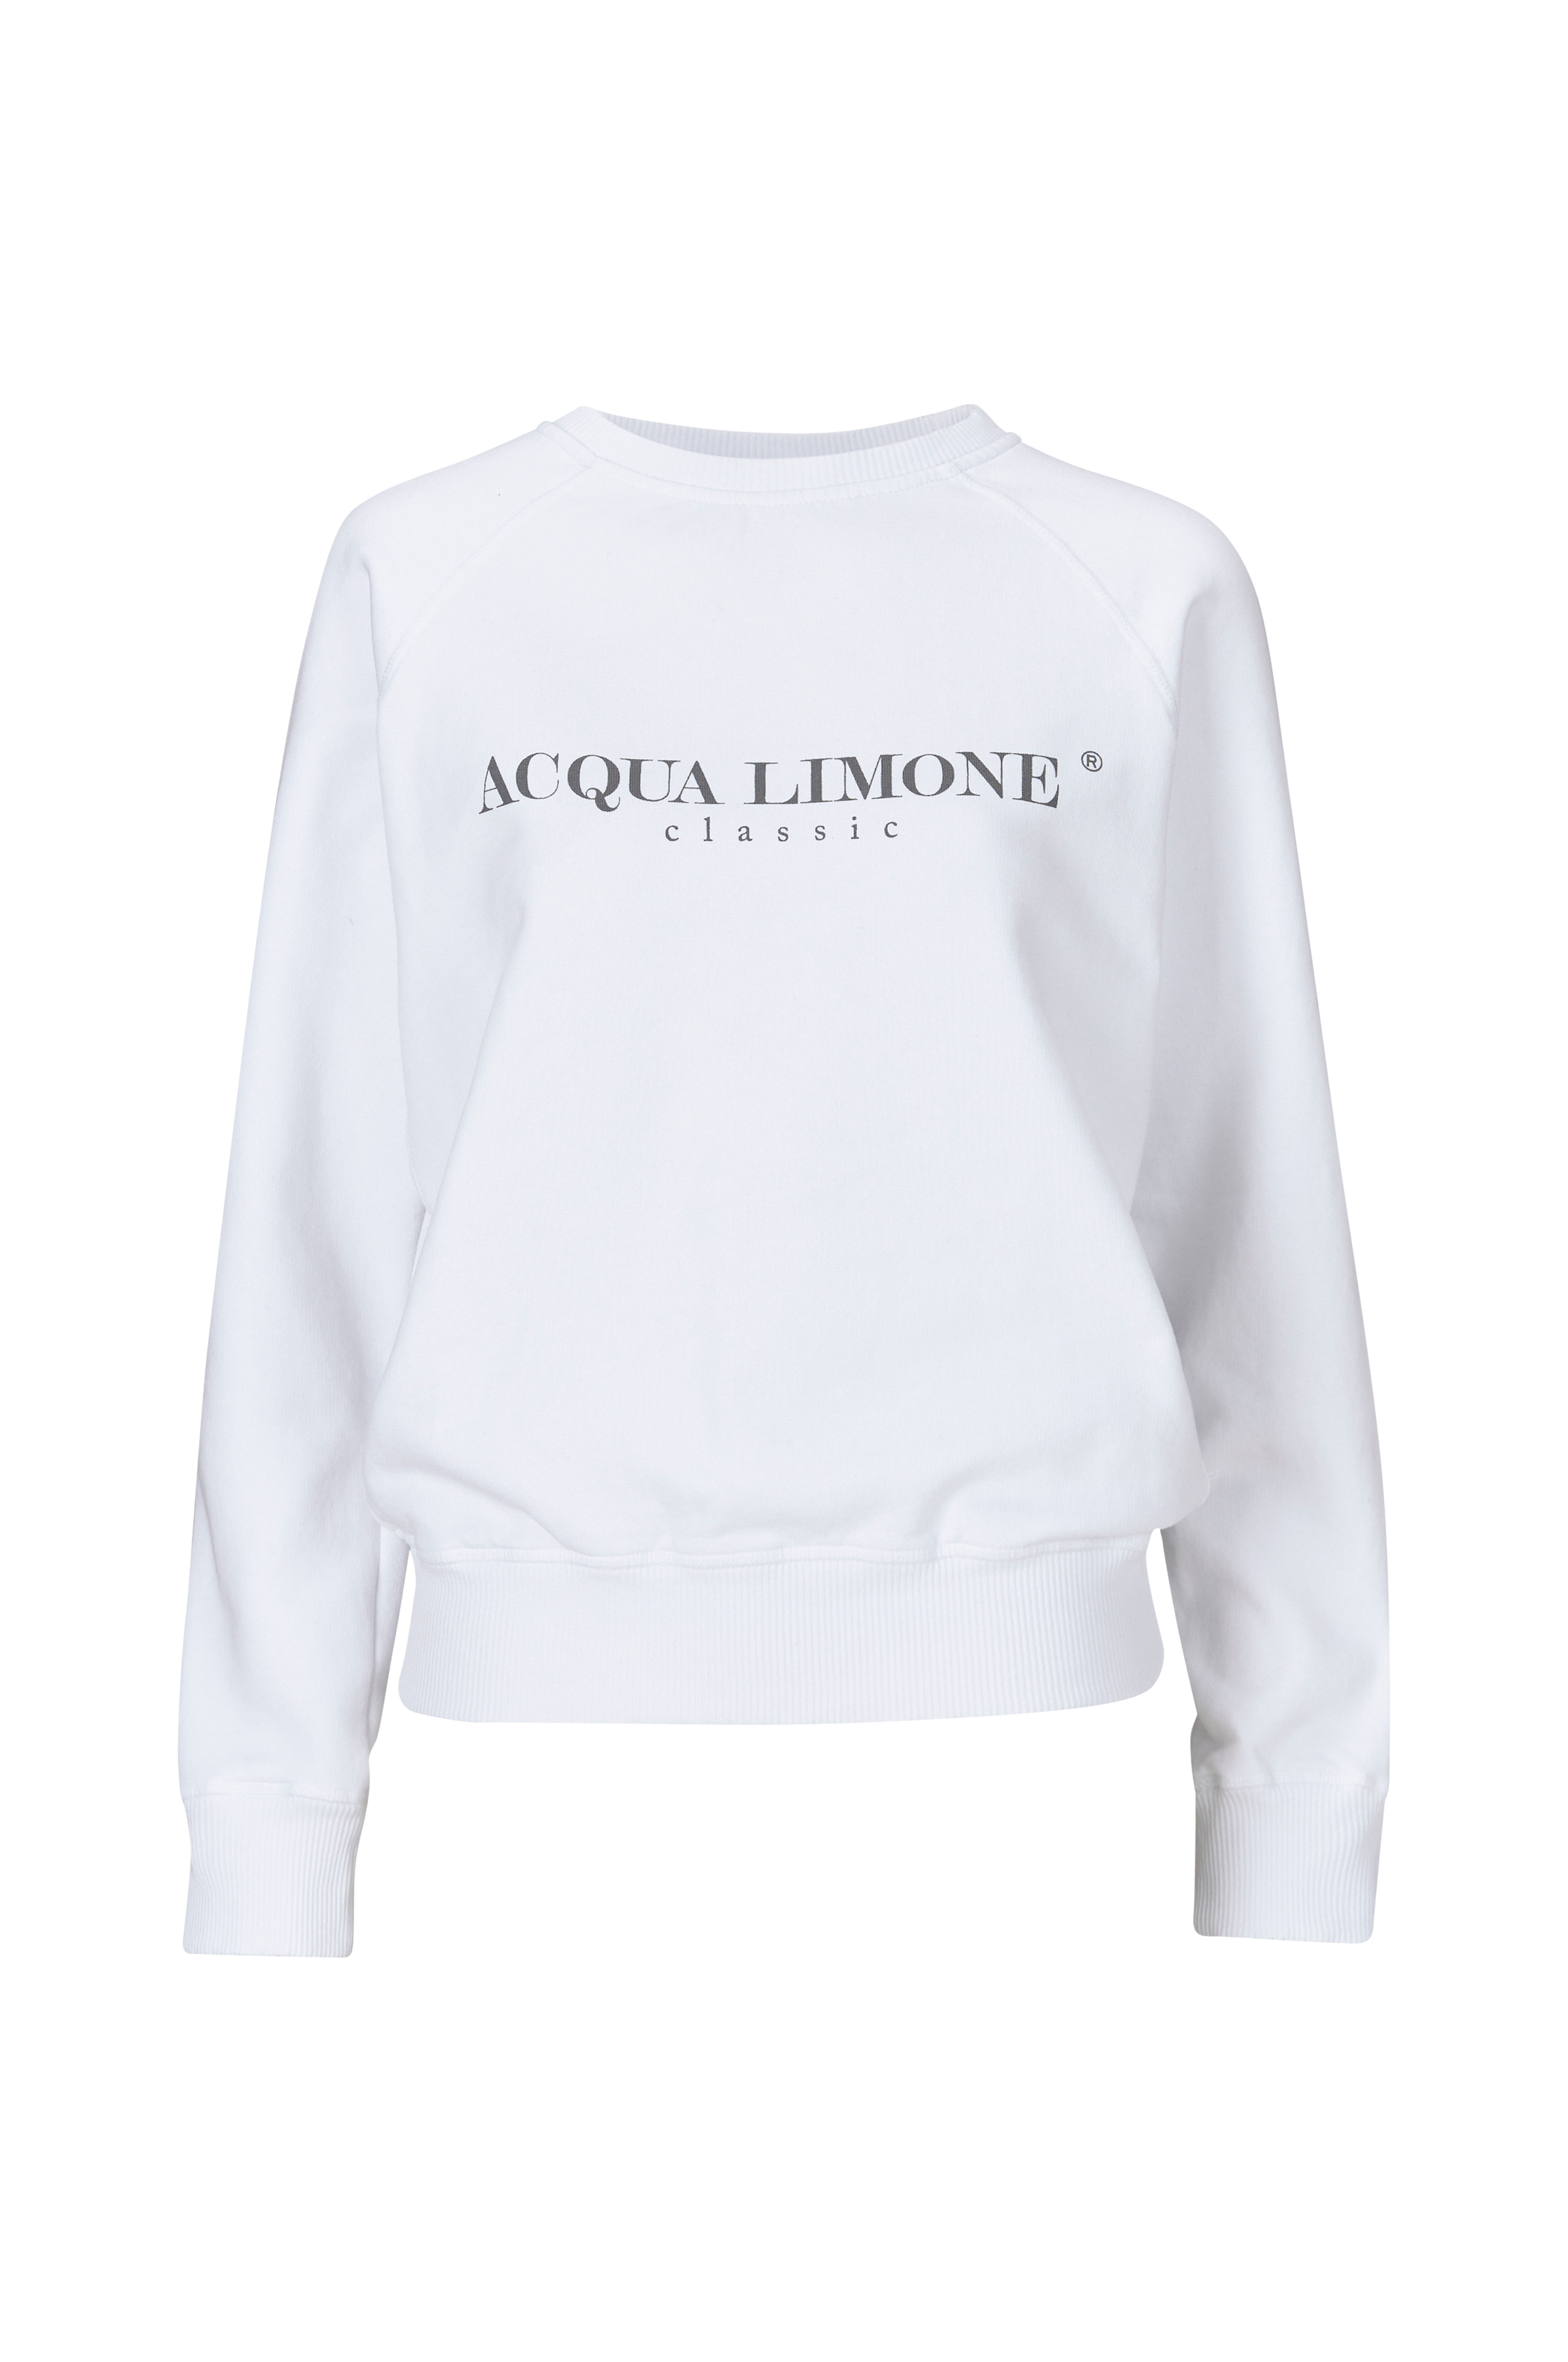 kantsten Monarch Drejning Acqua Limone Sweatshirt College Classic - Hvid - Sweatshirts | Ellos.dk